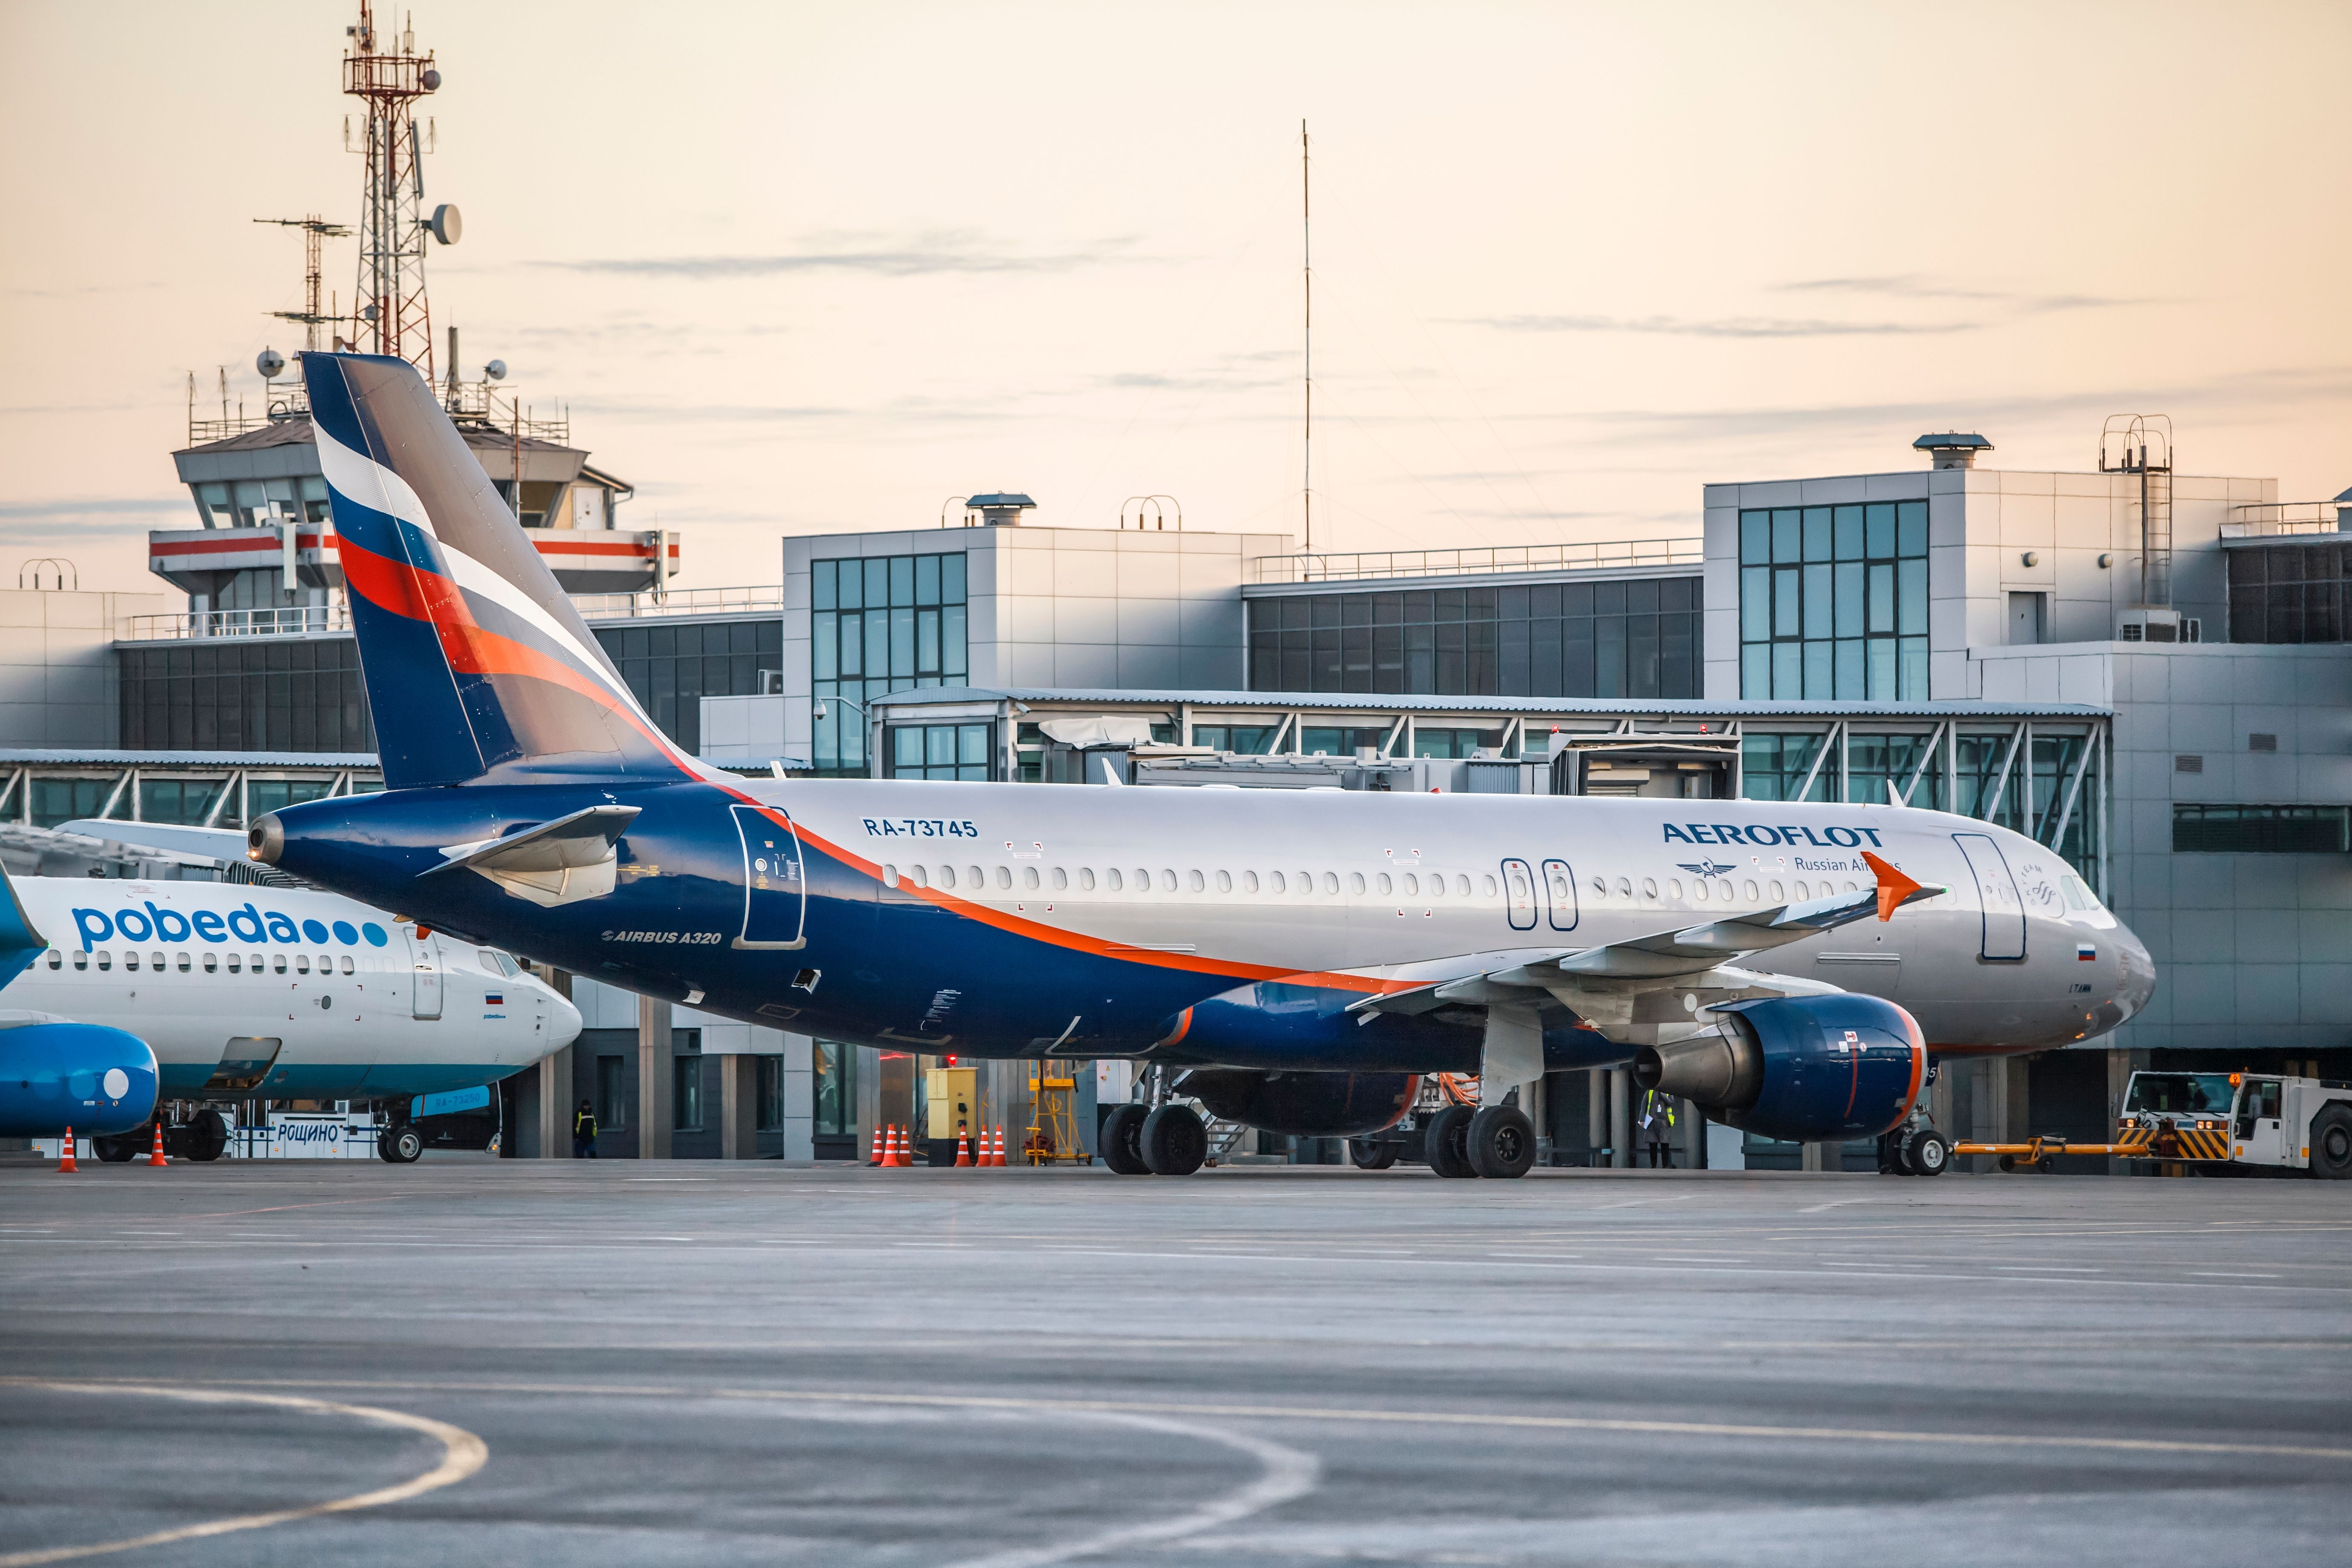 Aeroflot Airbus A320 at Roschino International Airport.